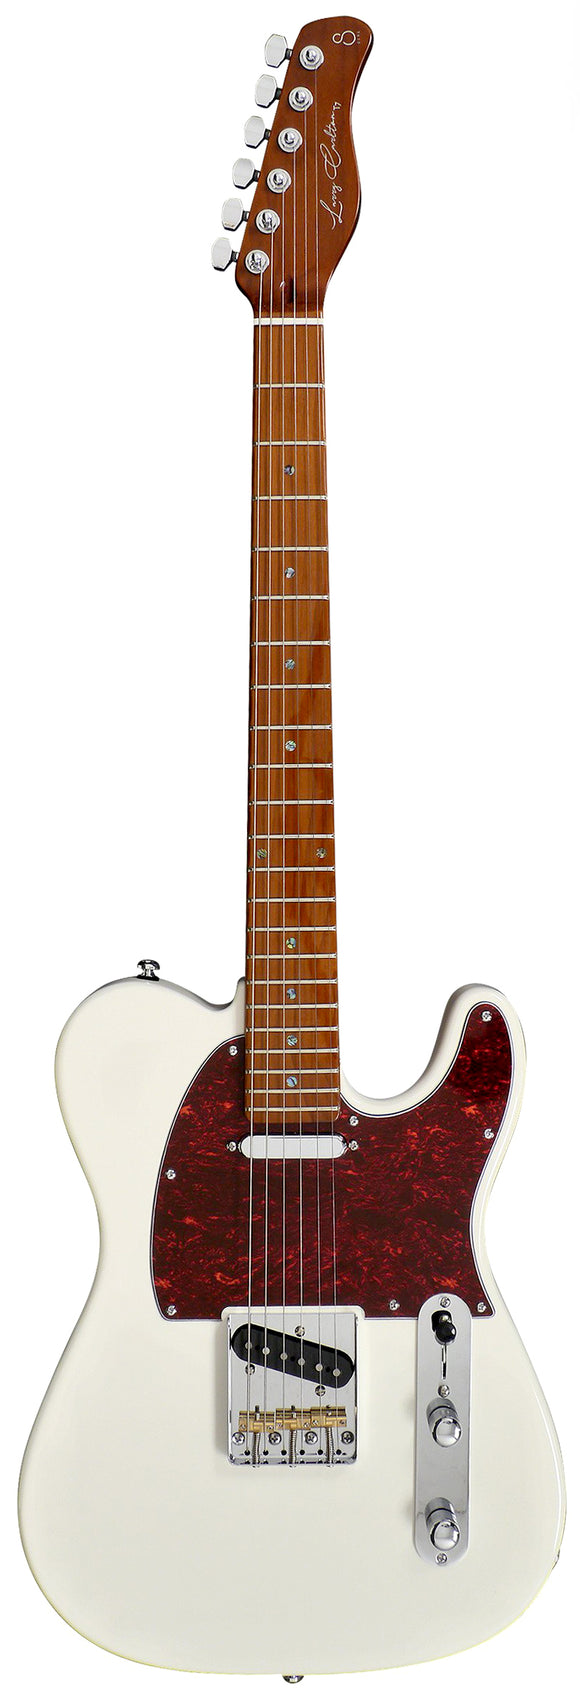 Sire T7 Larry Carlton Electric Guitar, Antique White